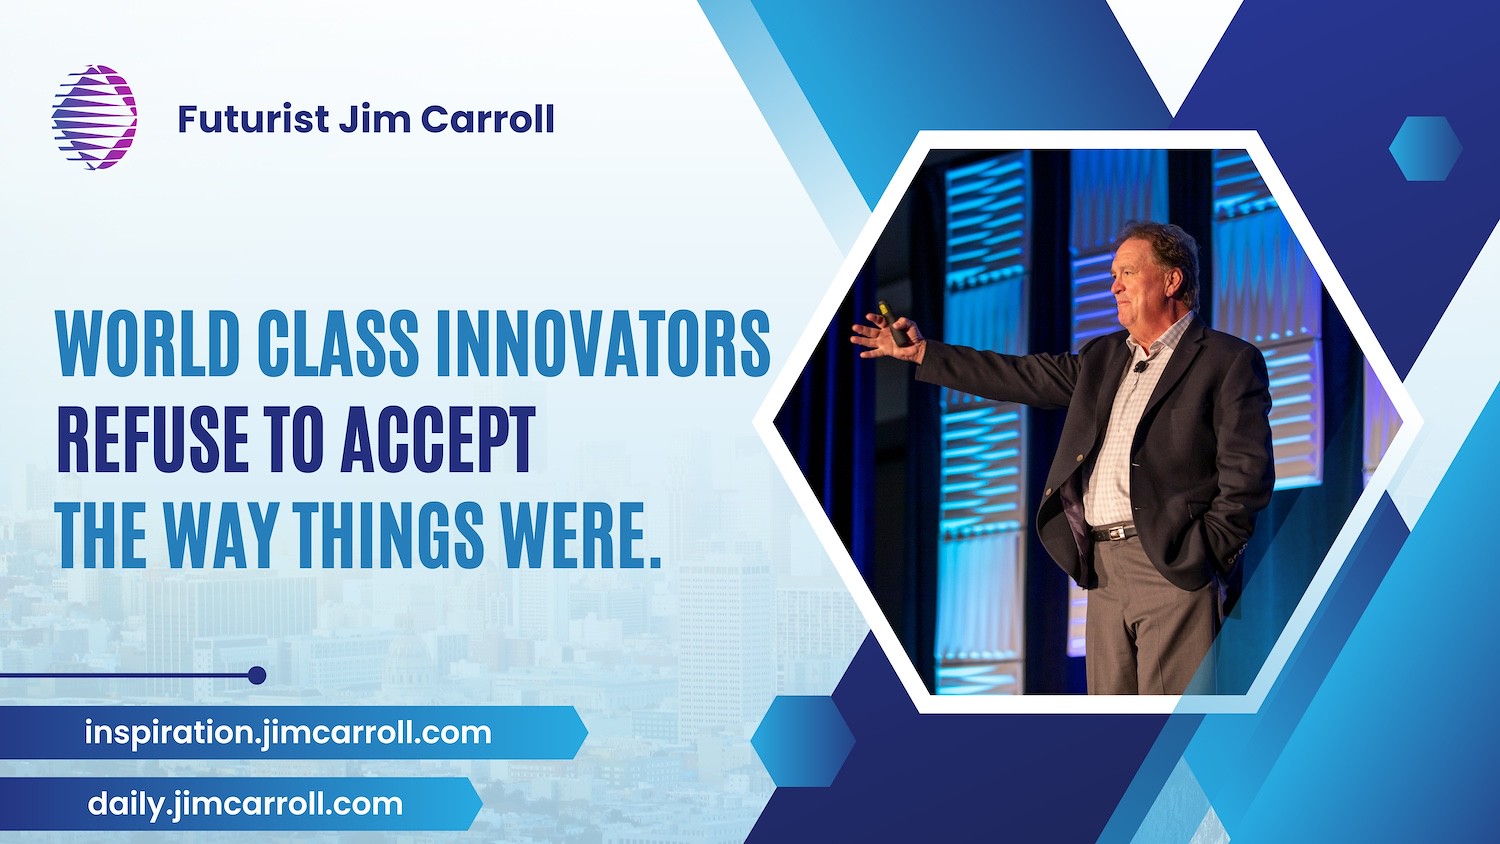 "World-class innovators refuse to accept the way things were" - Futurist Jim Carroll